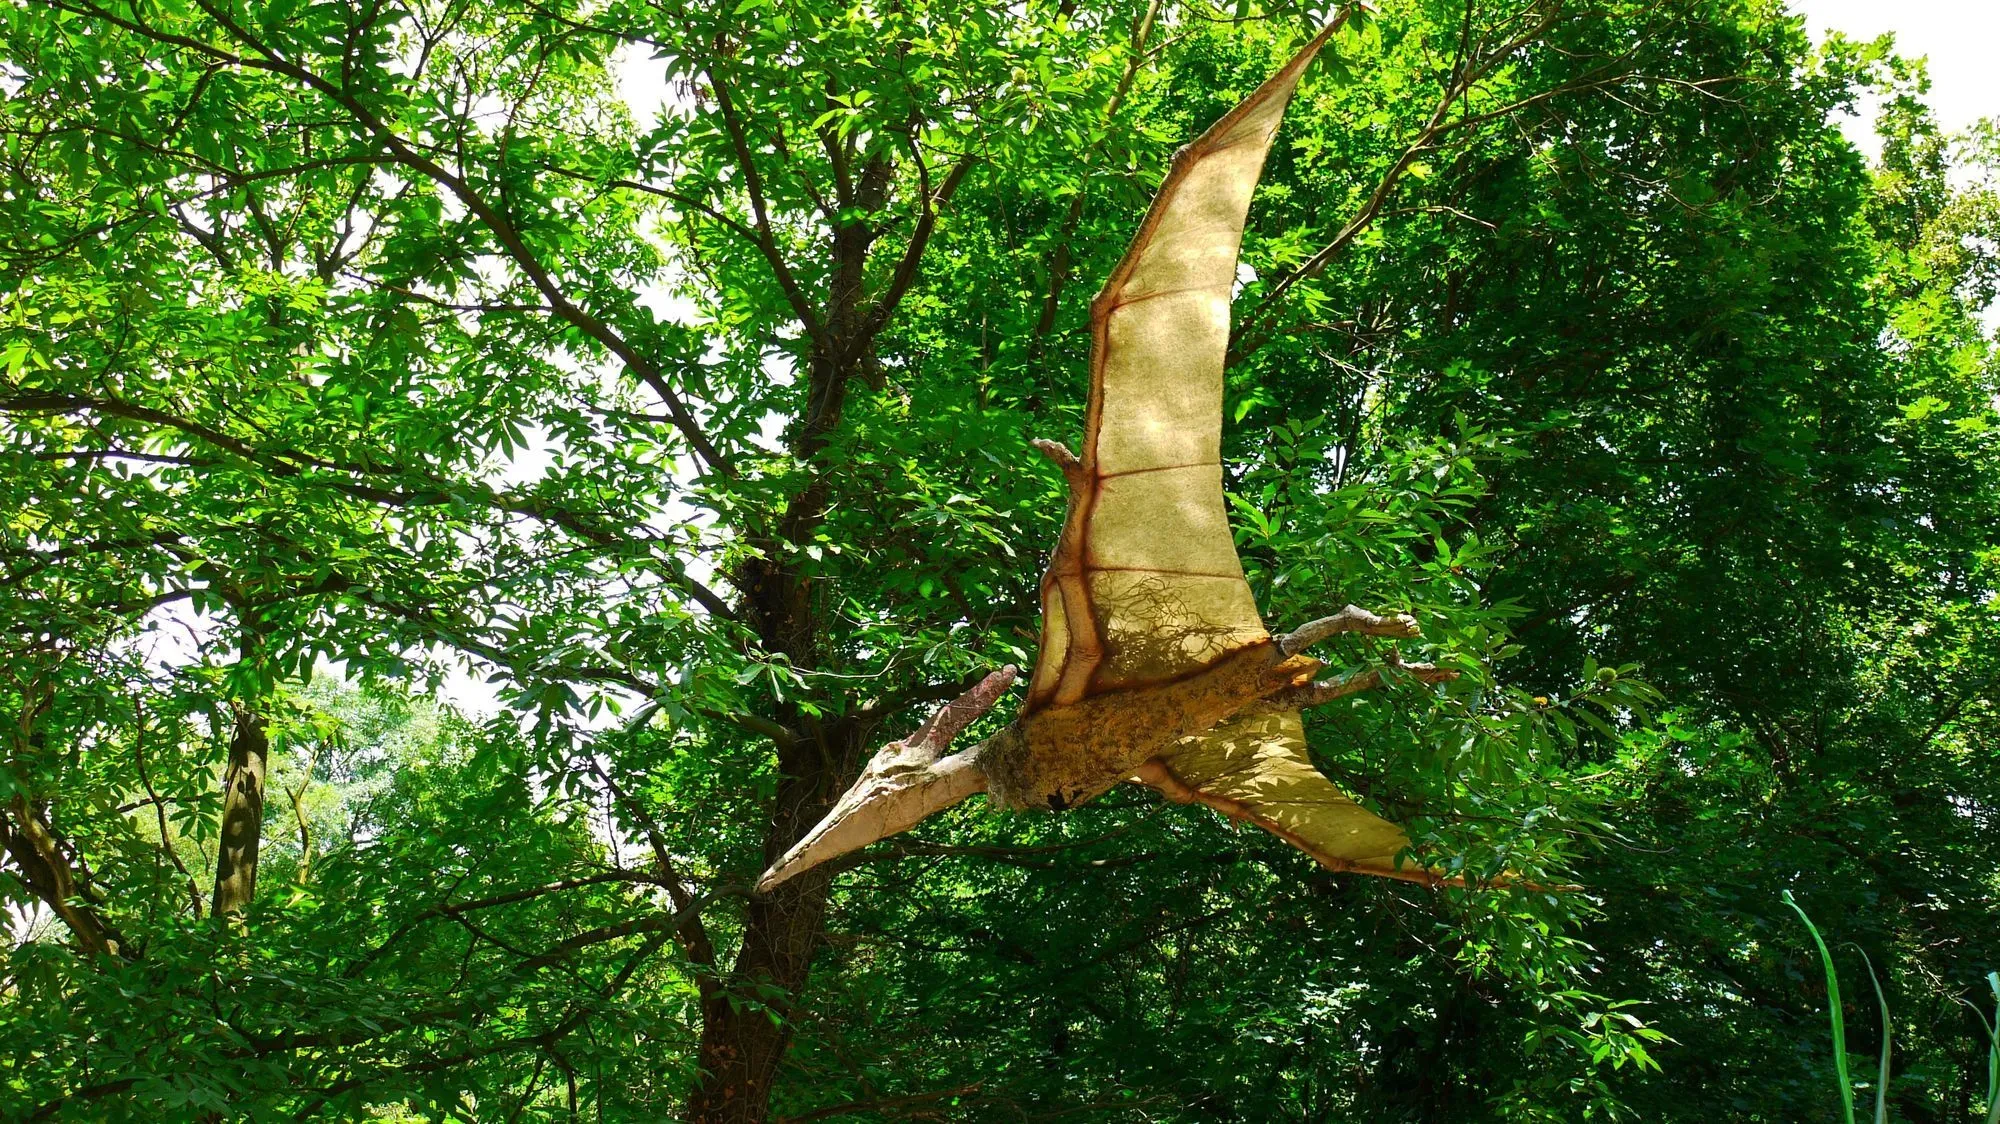 Caviramus was a Late Triassic period pterosaur that possessed fang-like teeth!